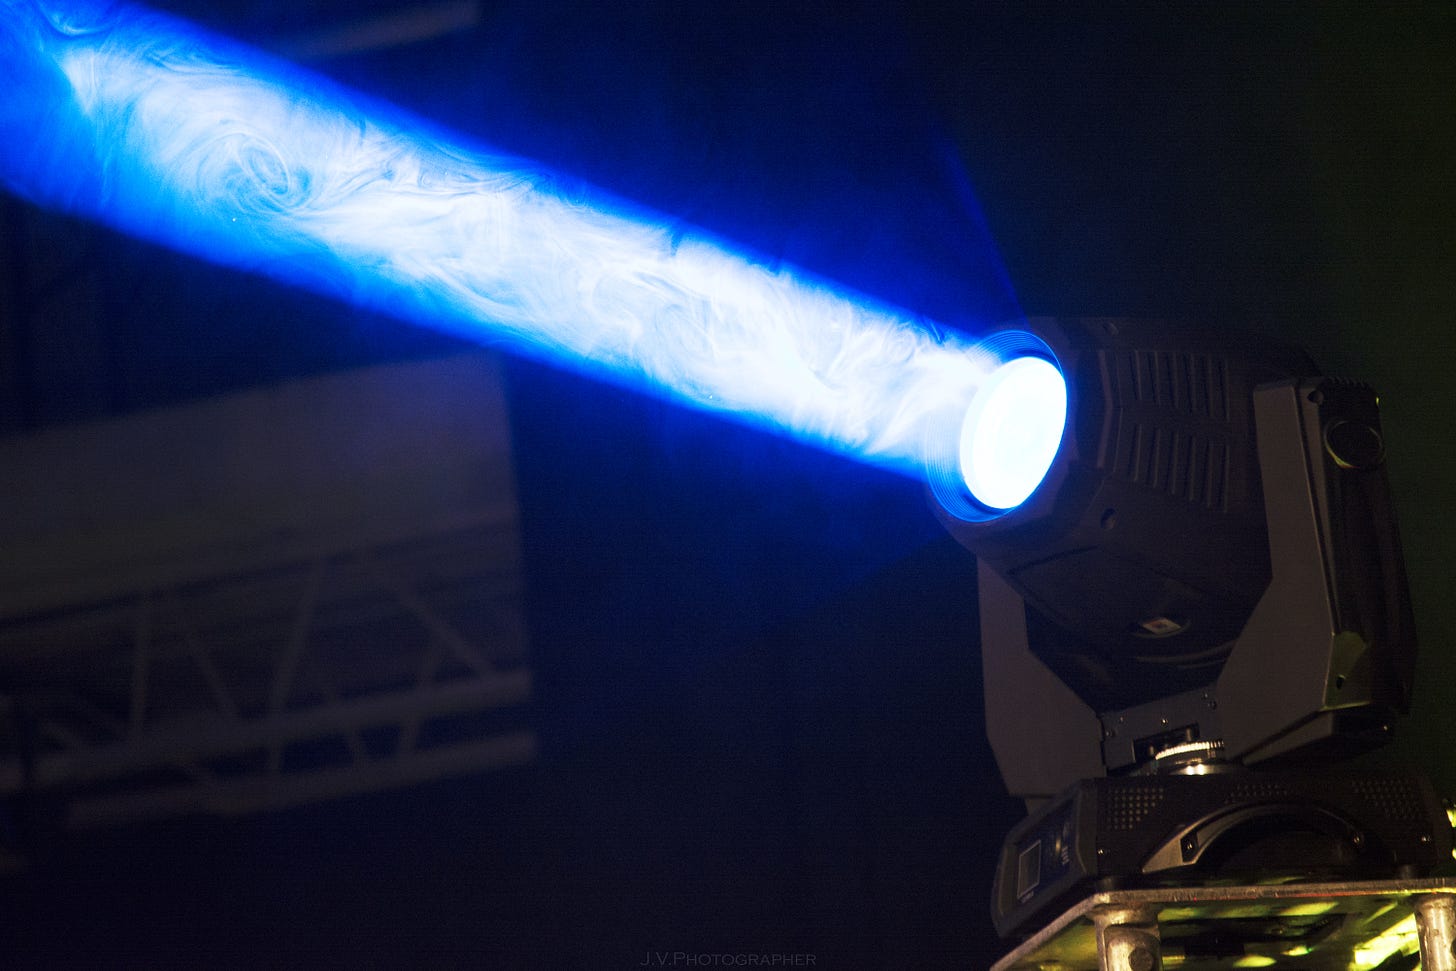 A spotlight machine projects a blue beam of light into a dark room.